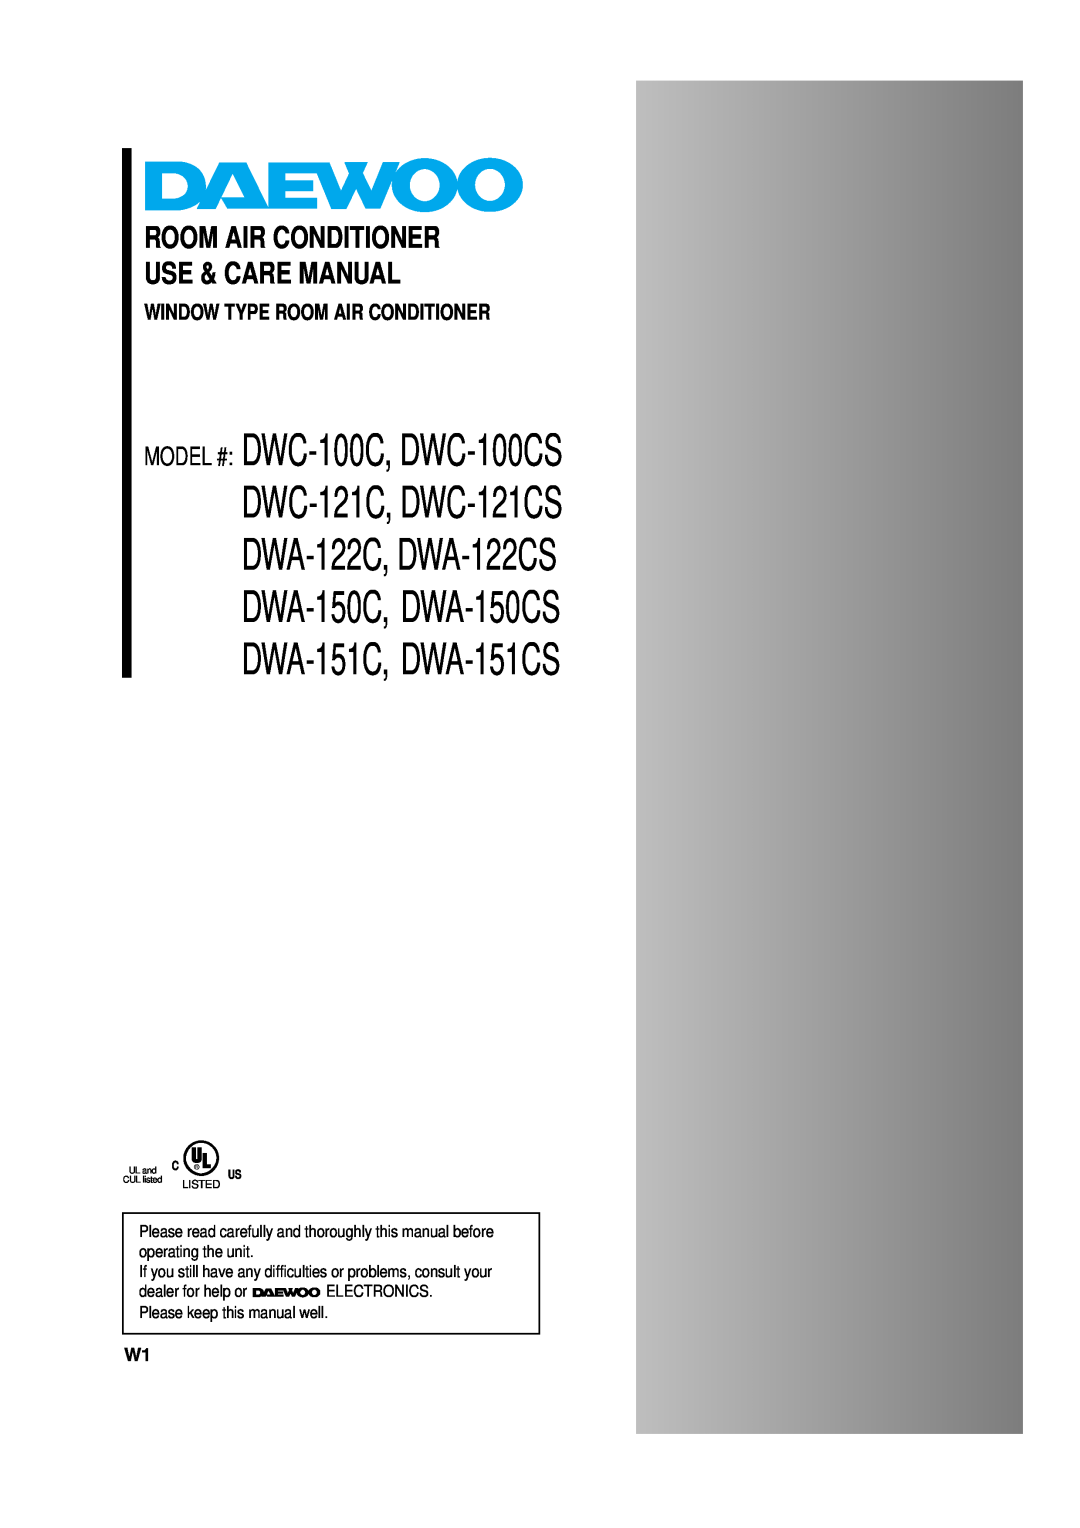 Daewoo DWC-100CS, DWC-121CS, DWA-150CS, DWA-151C Window Type Room Air Conditioner, Room Air Conditioner Use & Care Manual 